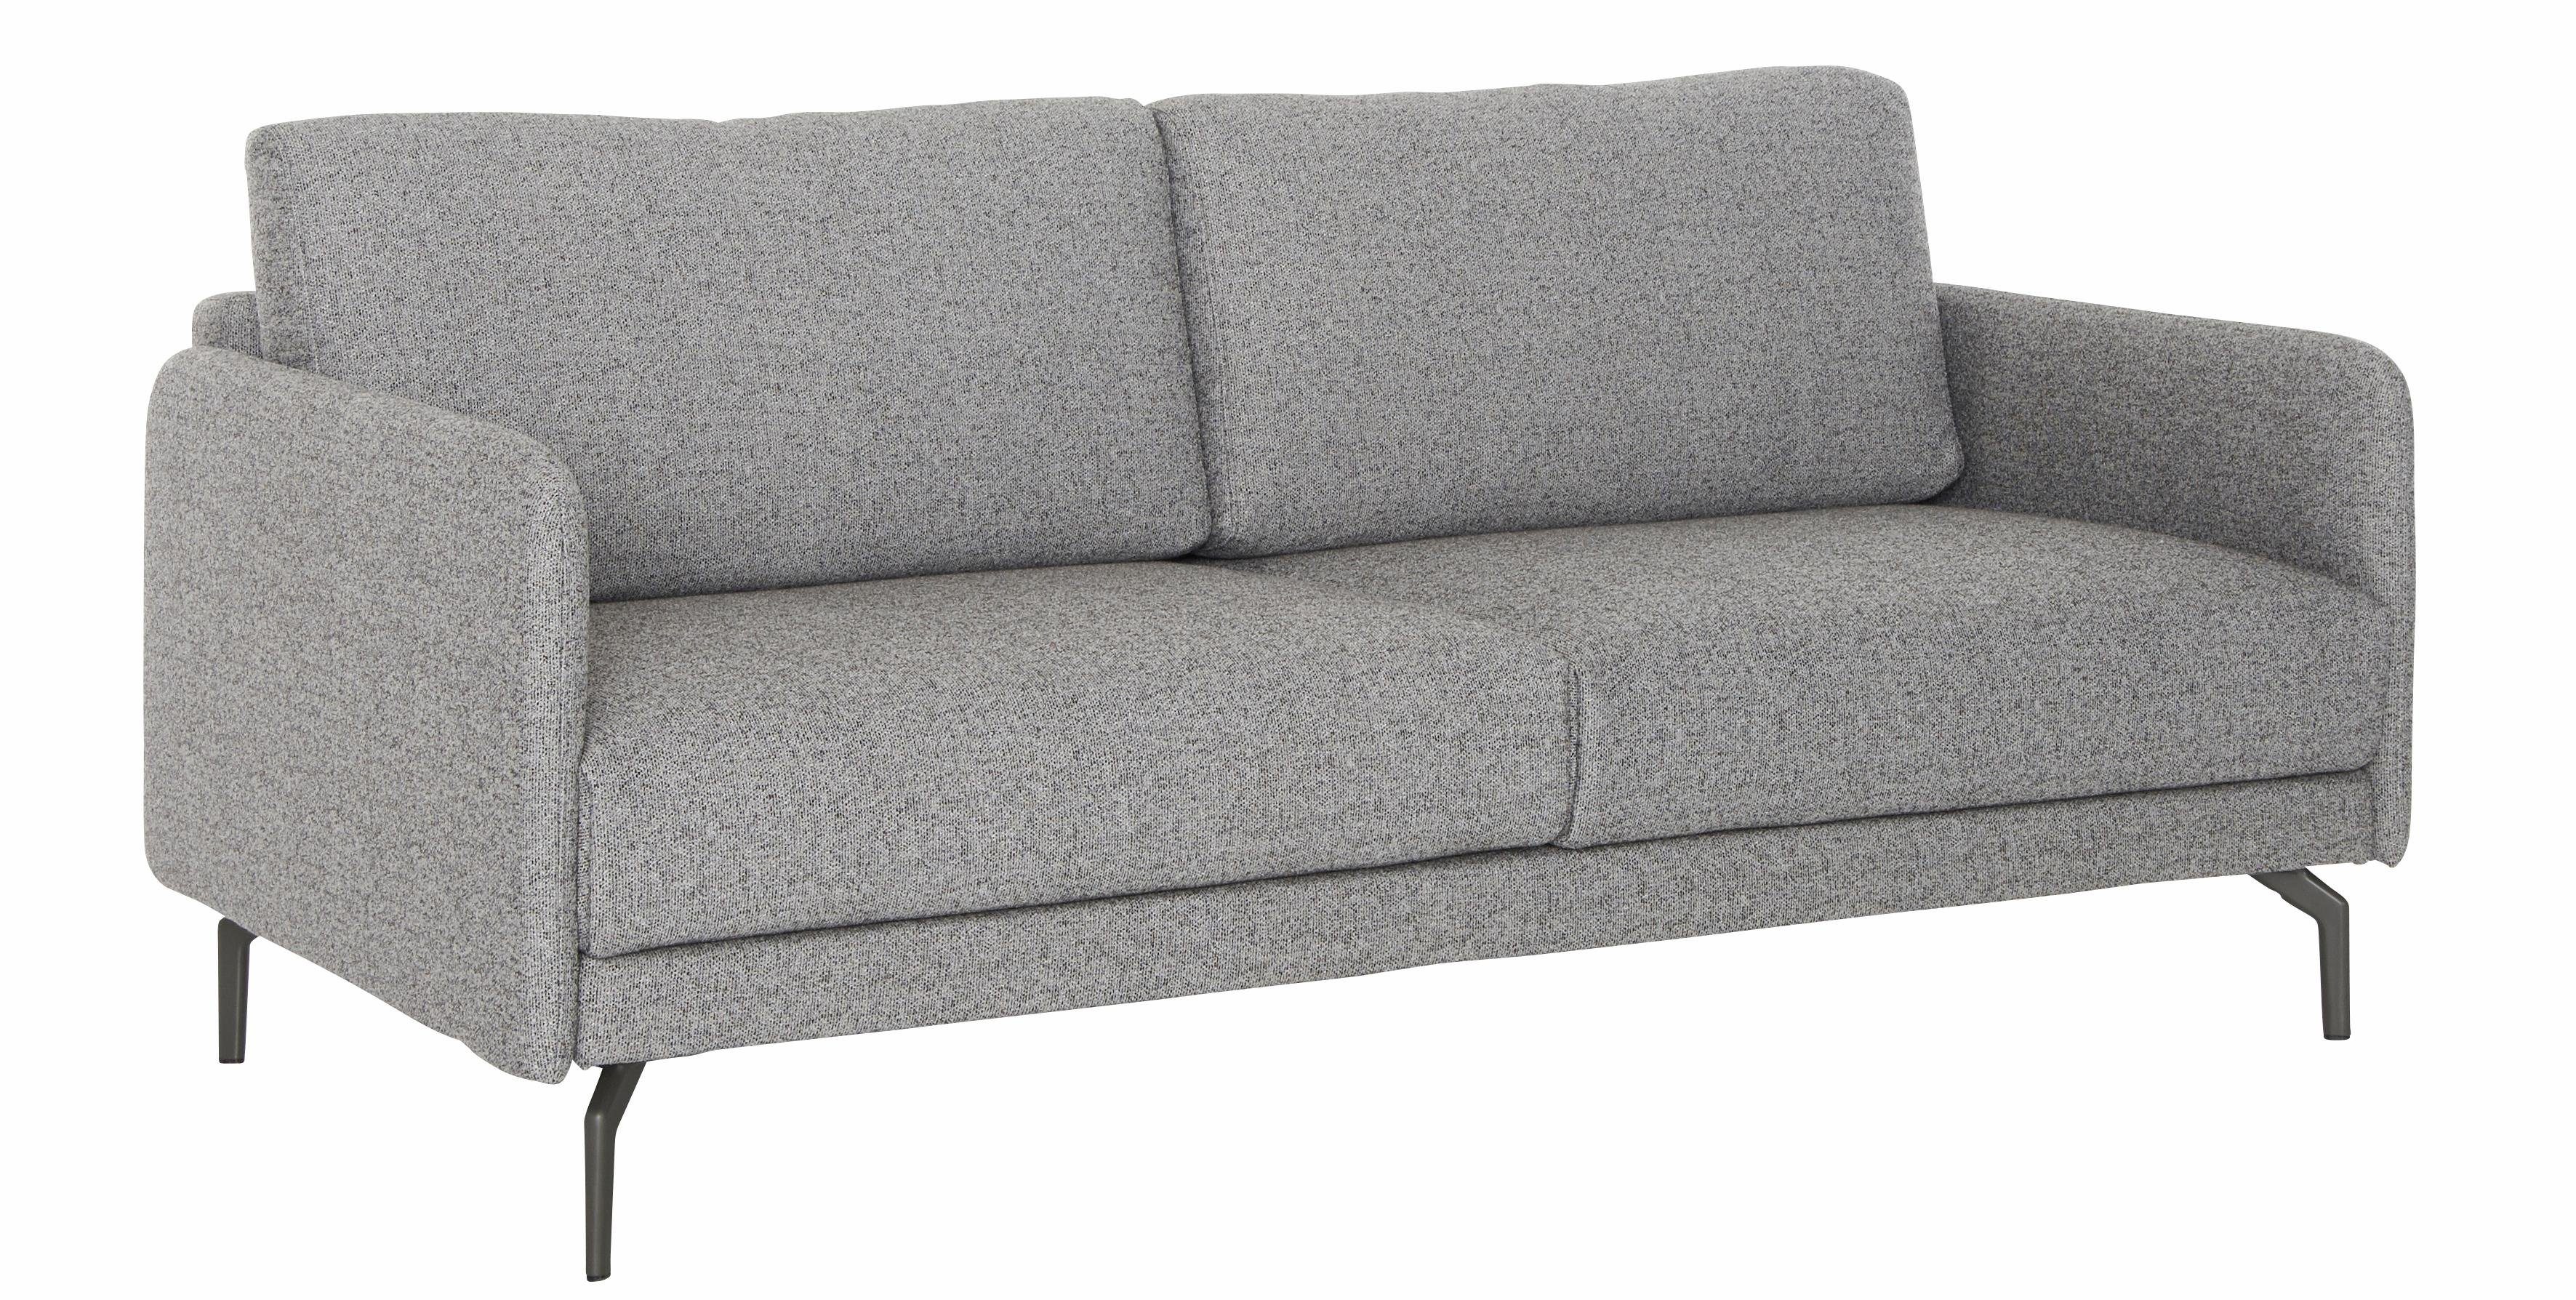 Armlehne Breite 3-Sitzer Umbragrau hülsta hs.450, sofa sehr Alugussfuß schmal, cm, 190